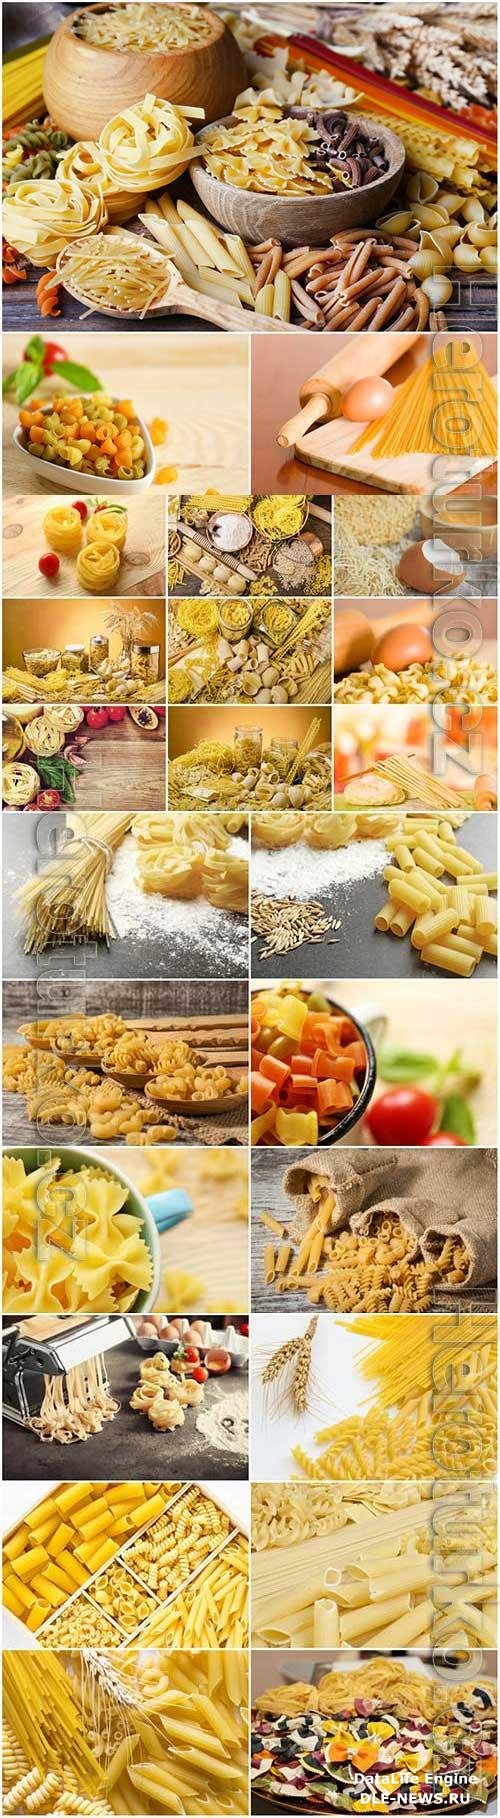 Different types of pasta stock photo